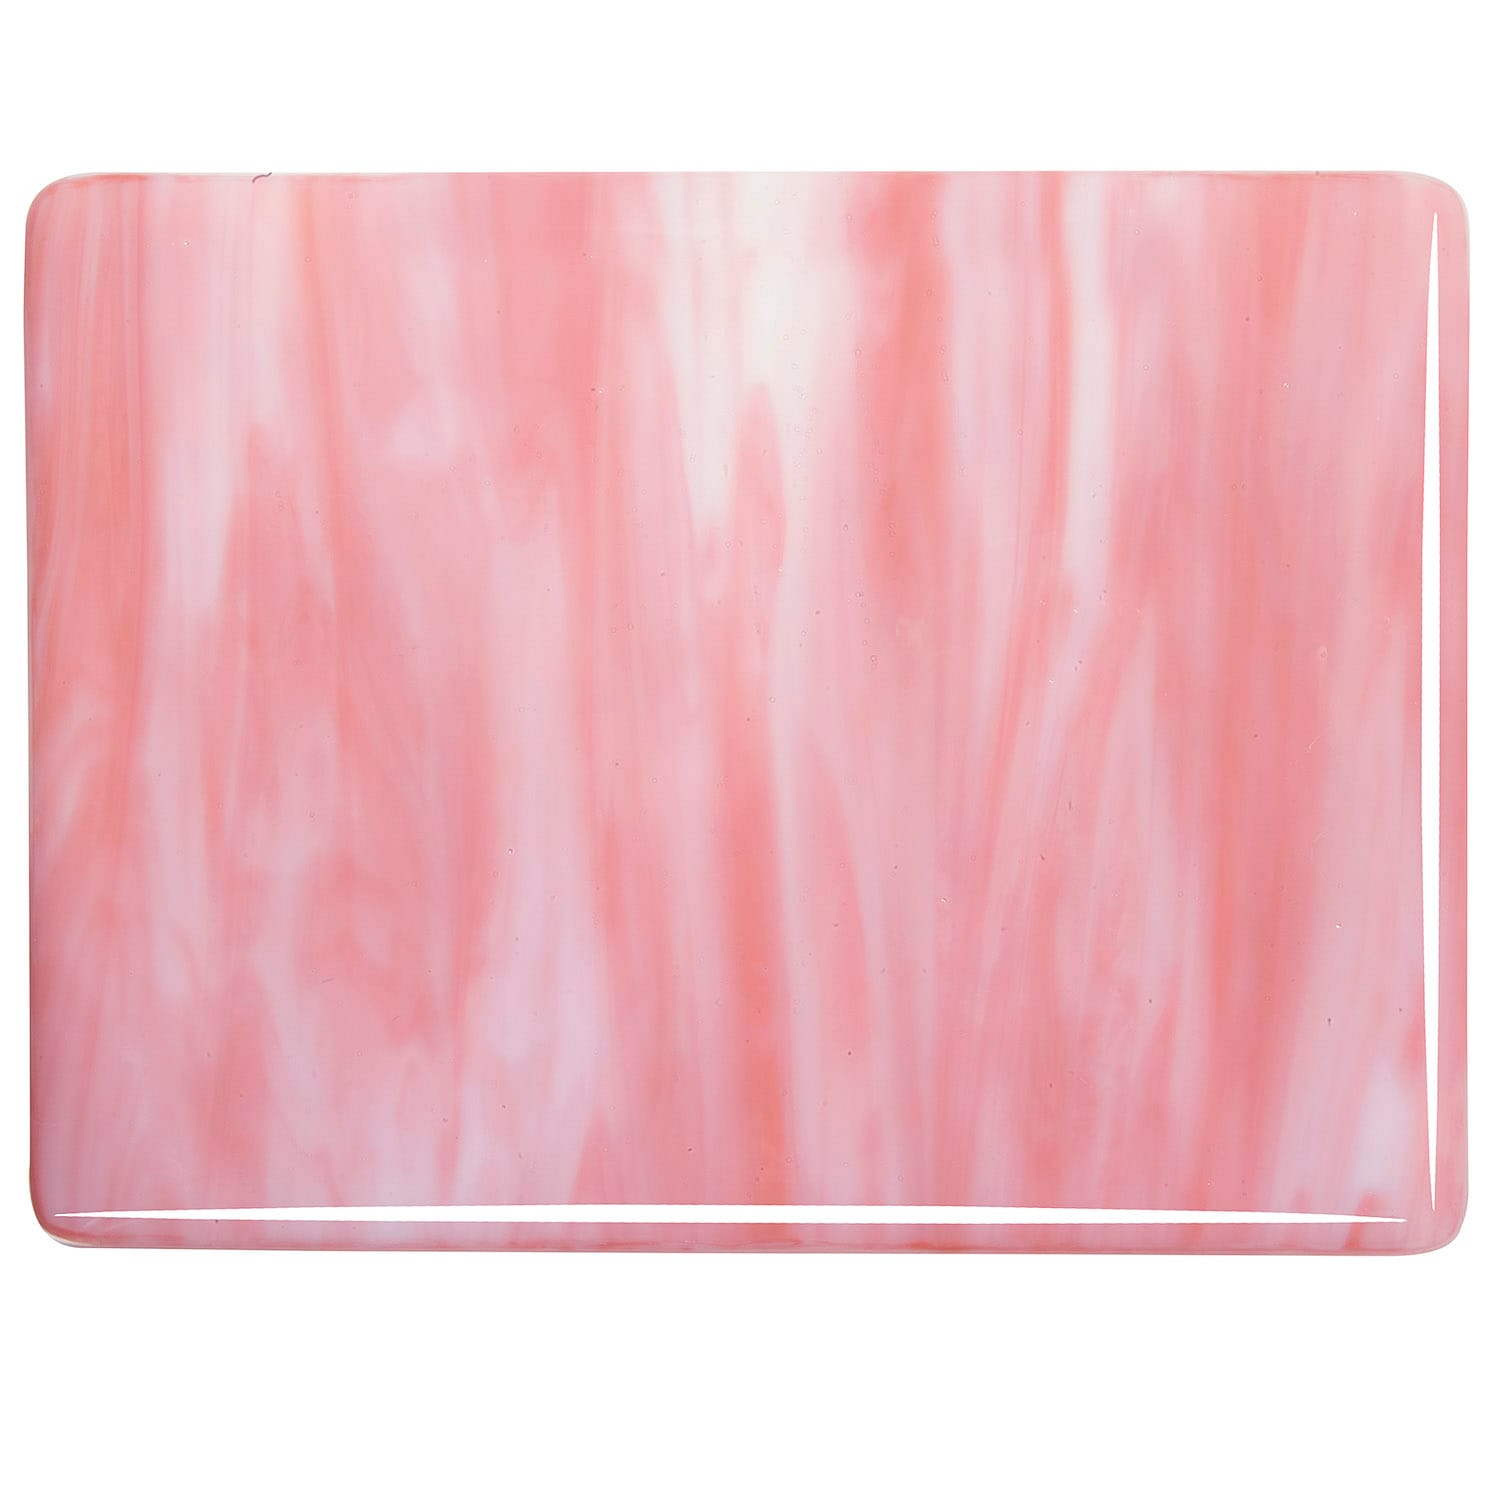 Bullseye COE90 Fusing Glass 002305 White Opalescent, Salmon Pink Opalescent Full Sheet